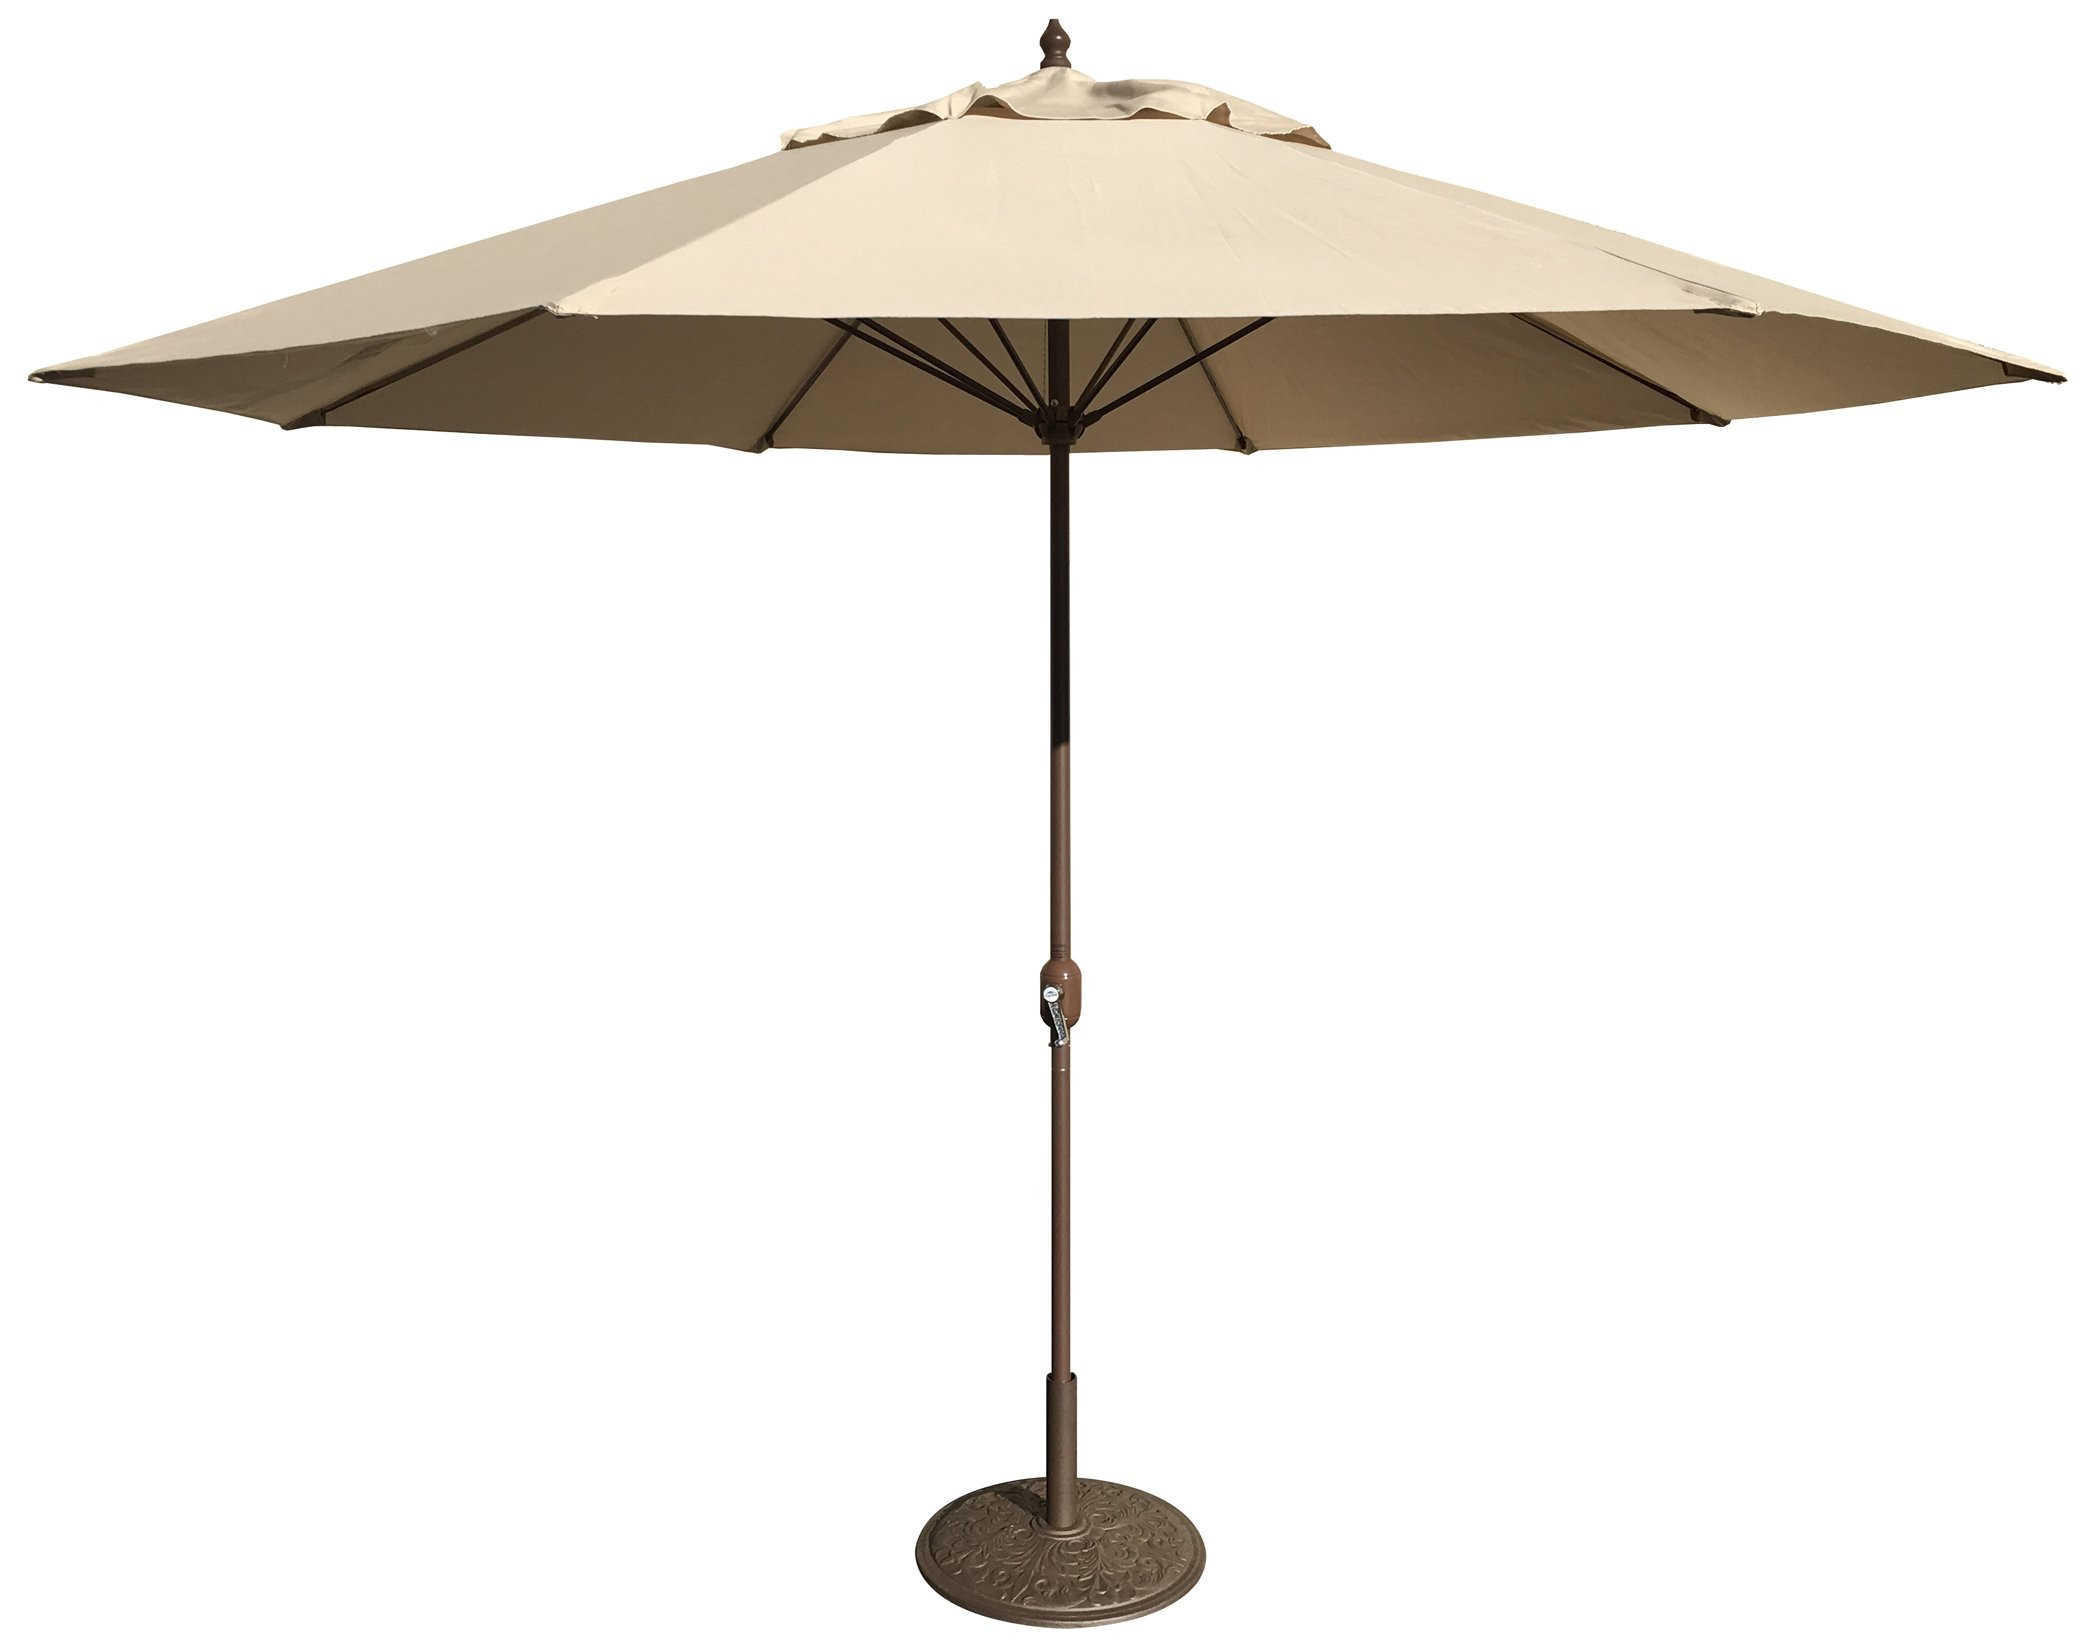 Best ideas about Amazon Patio Umbrella
. Save or Pin Outdoor Umbrellas Amazon Now.